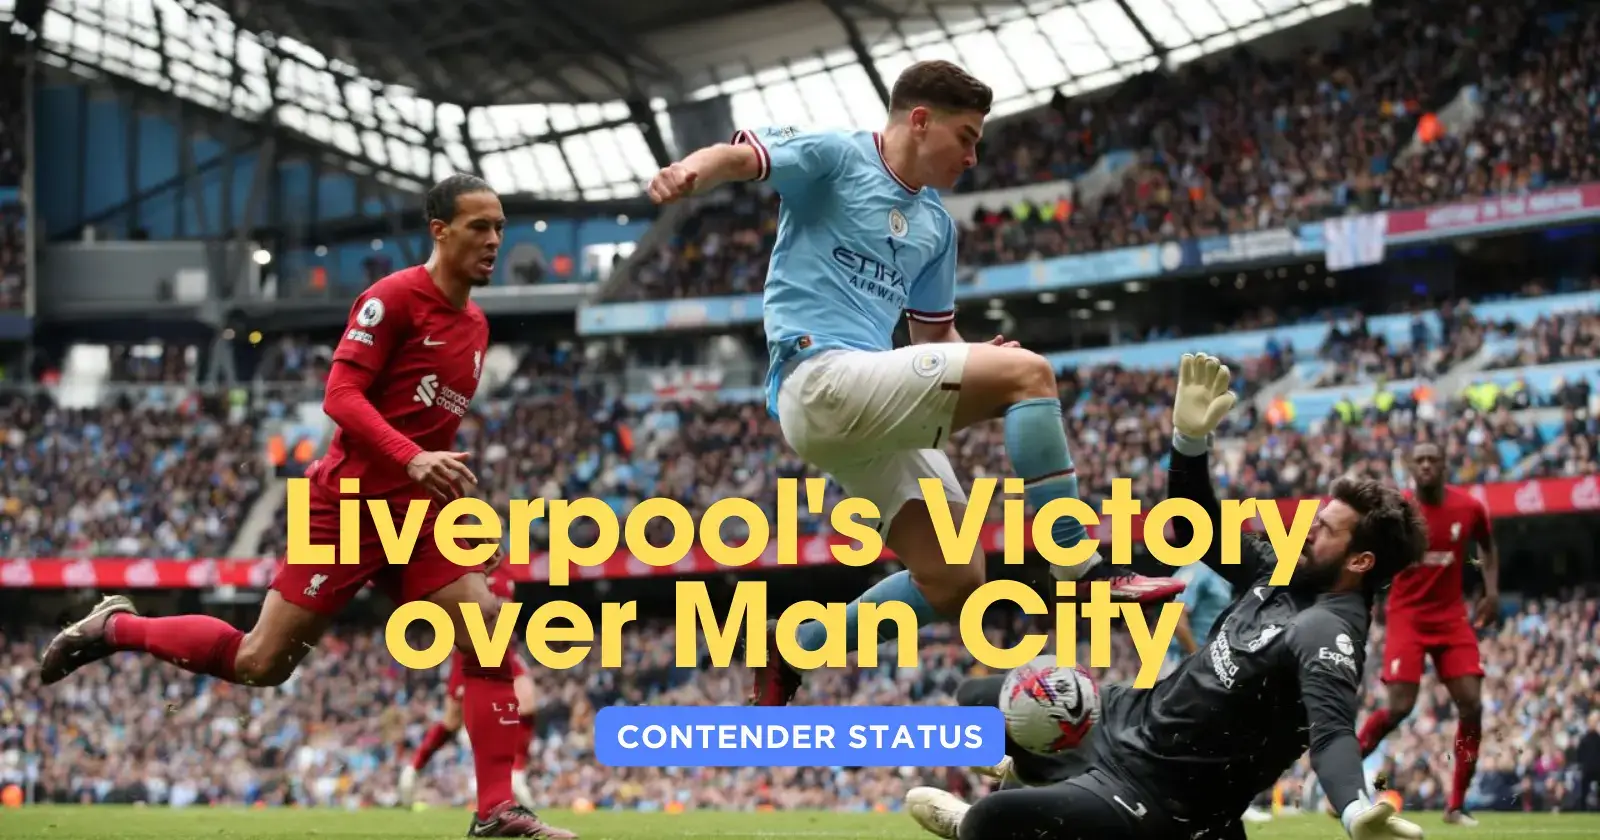 liverpool-seek-statement-victory-over-man-city-assert-contender-status